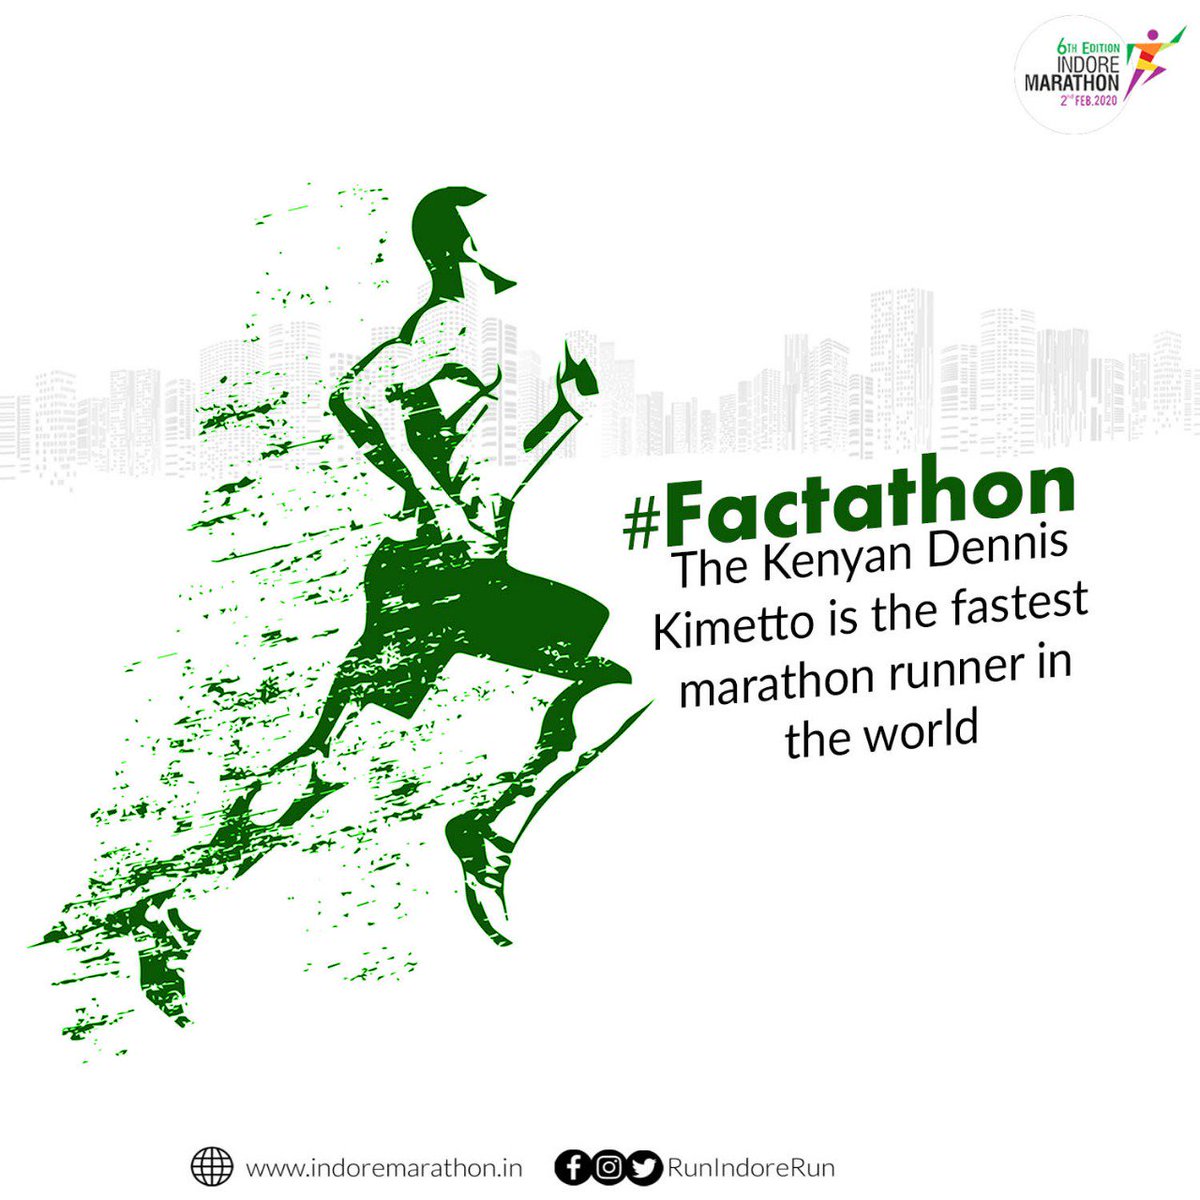 #Factathon 
Did you know this amazing marathon fact?
#run #paceup #victory #history #marathon #runindorerun #indoremarathon
#Aim #efficientrunning